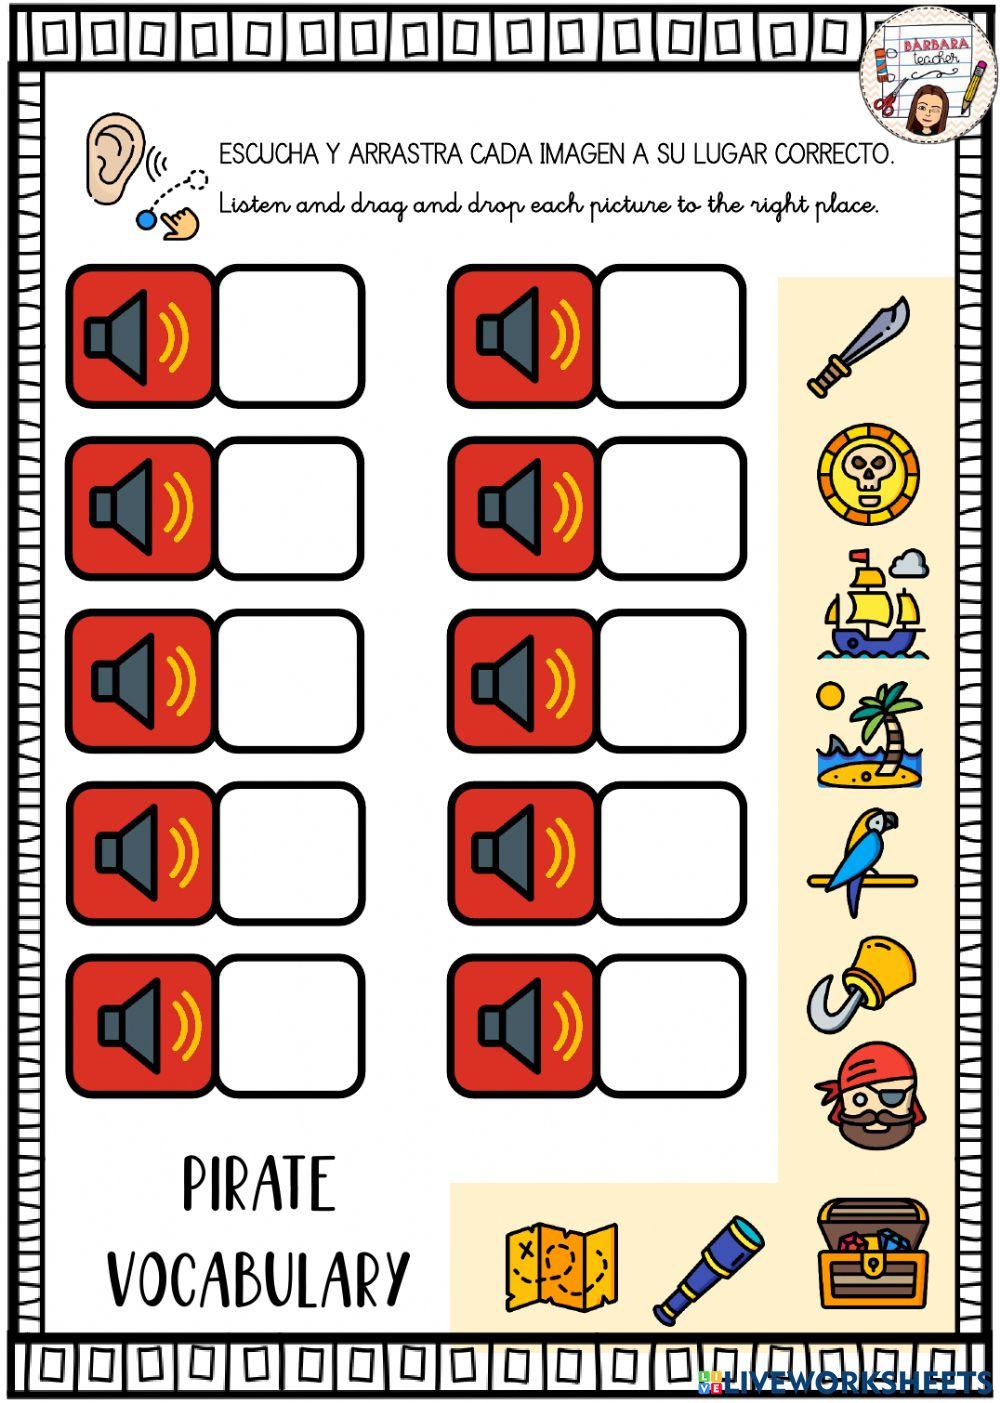 Pirate vocabulary